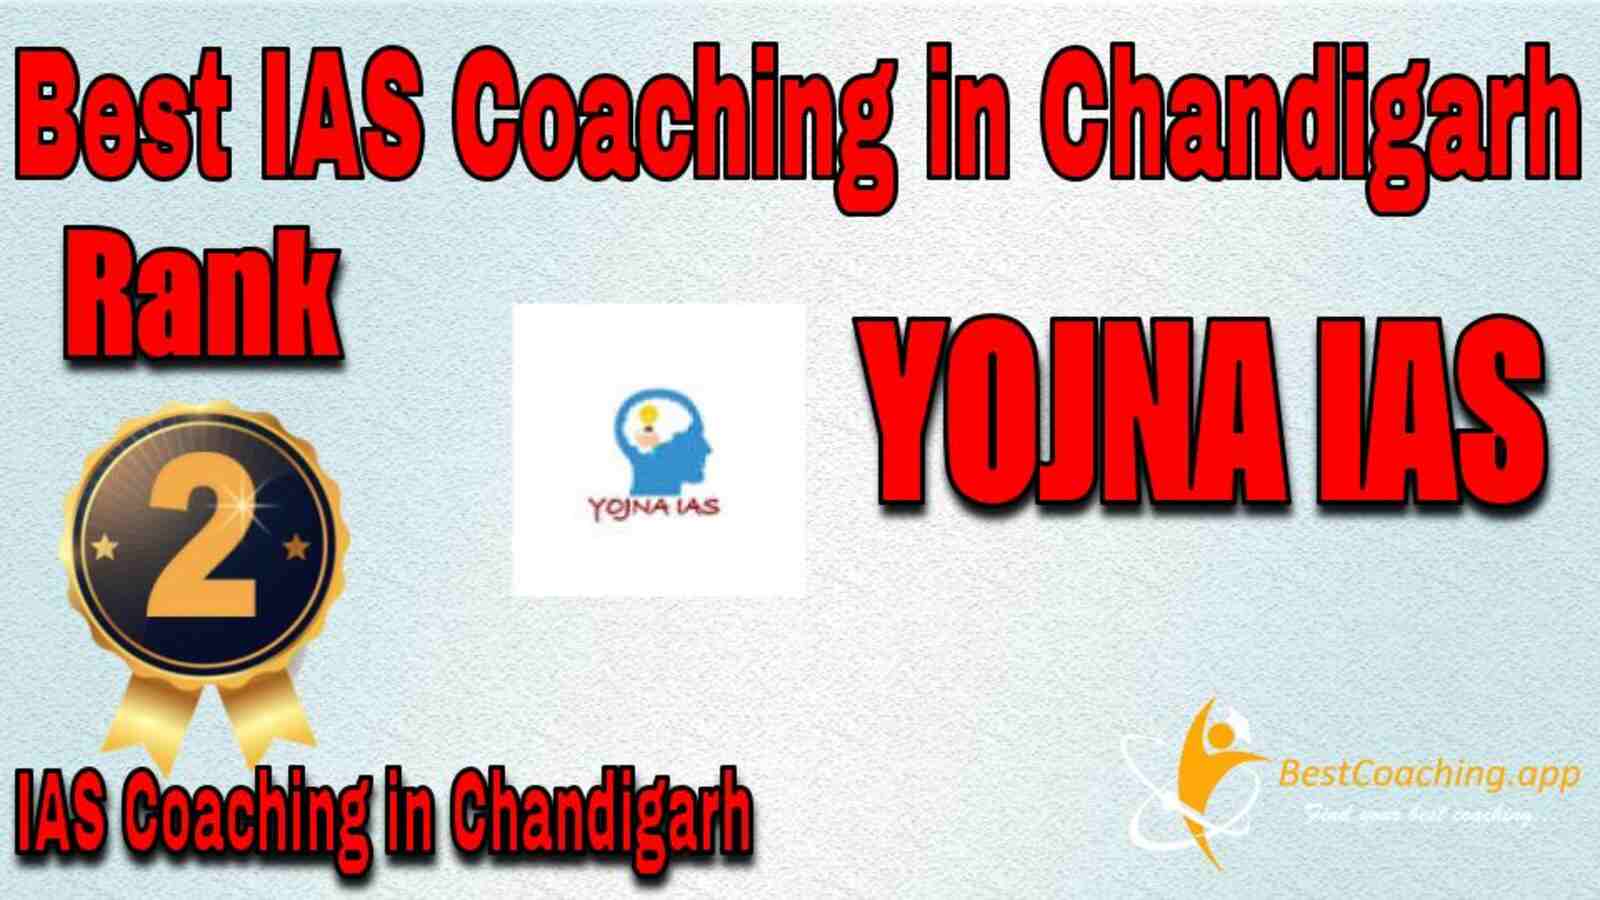 Rank 2 Best IAS Coaching Institute in Chandigarh